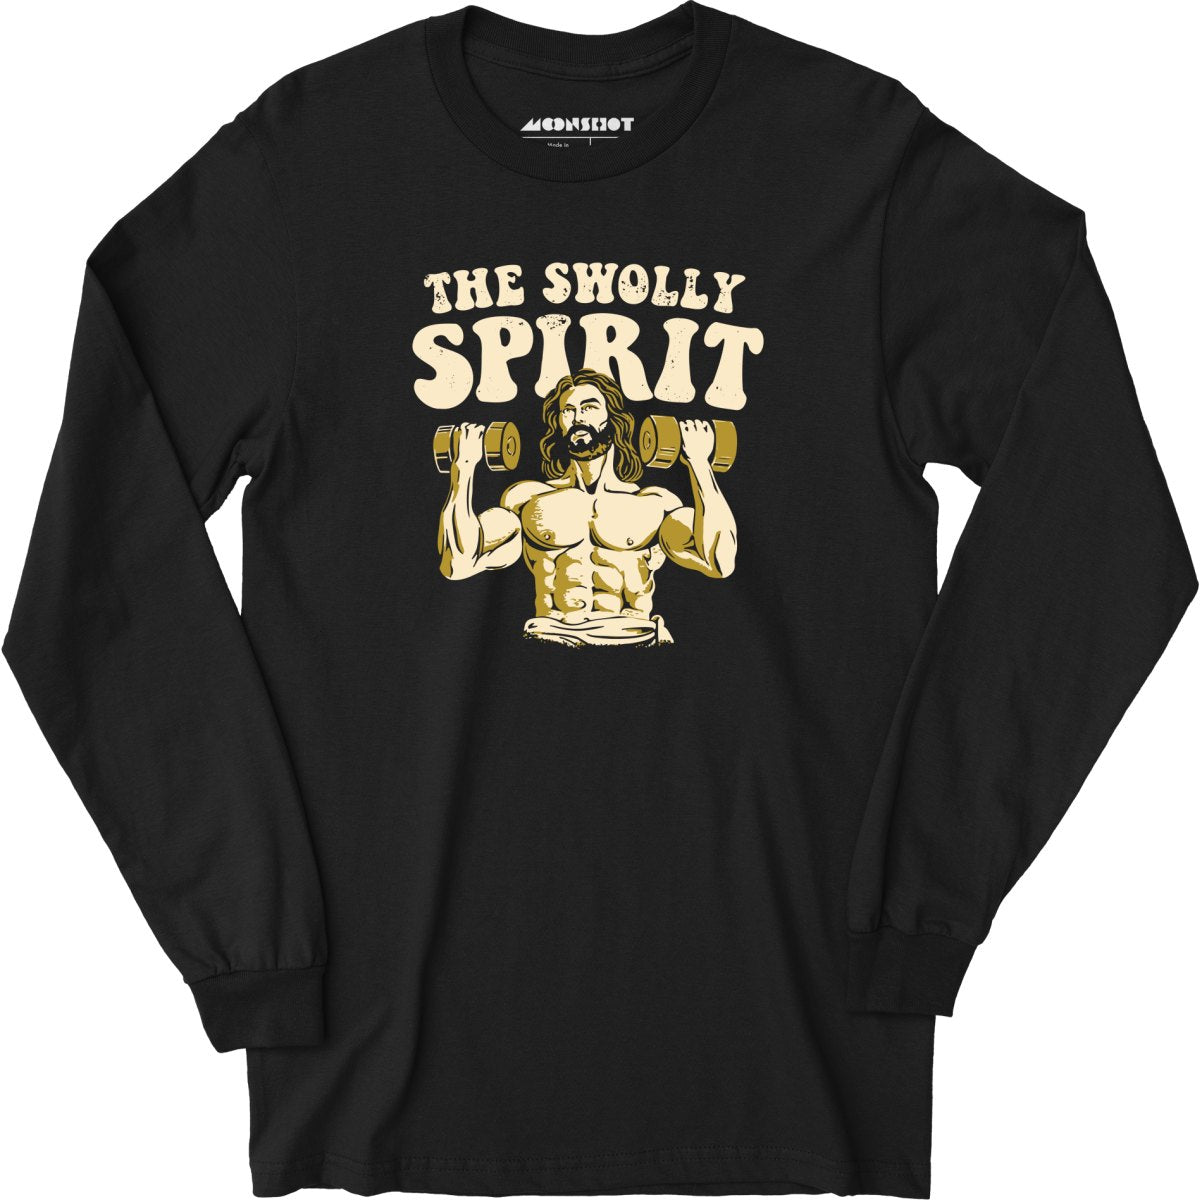 The Swolly Spirit - Long Sleeve T-Shirt